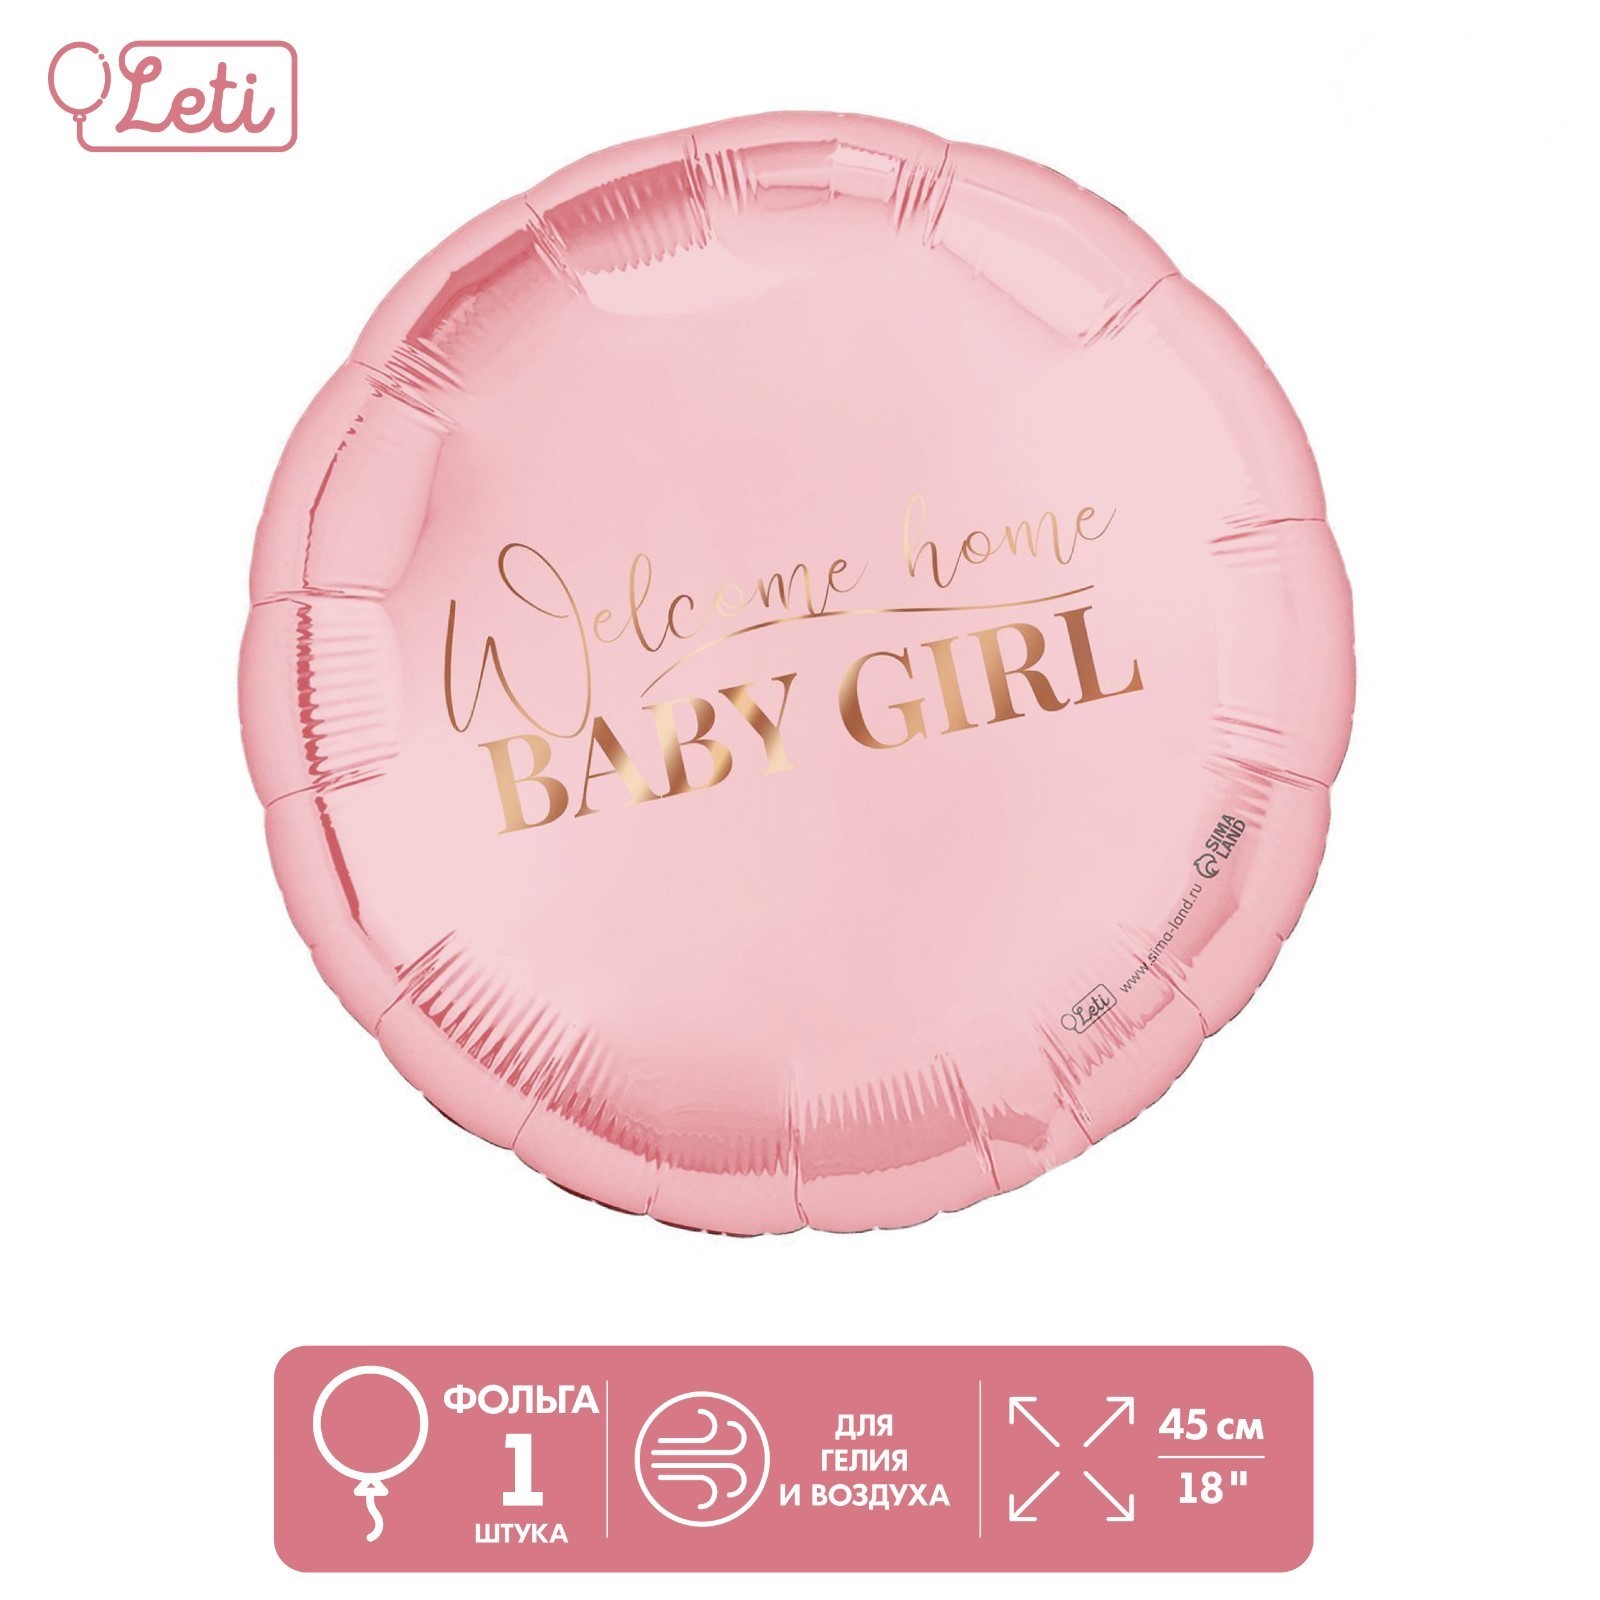 Шар фольгированный Leti Baby girl 9939363, диаметр 45 см, розовый шар фольгированный страна карнавалия монстрик циклоп диаметр 23